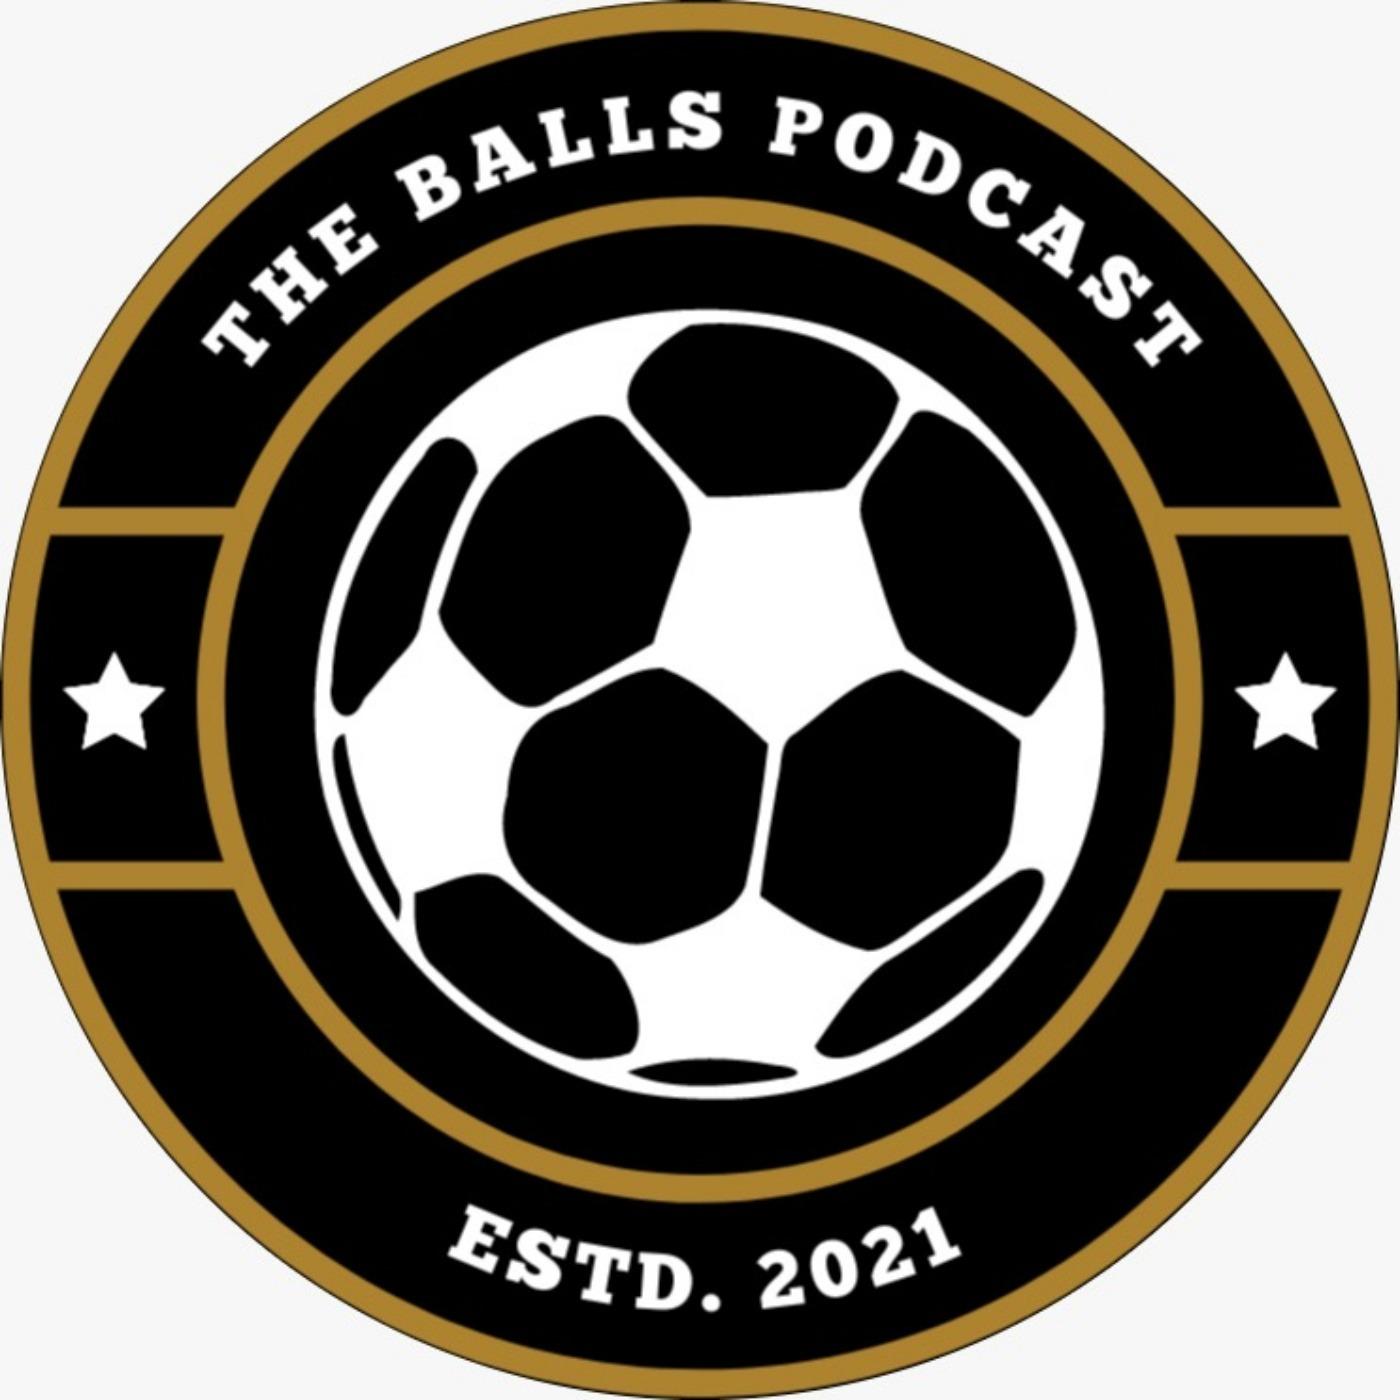 The BALLS Podcast ⚽️